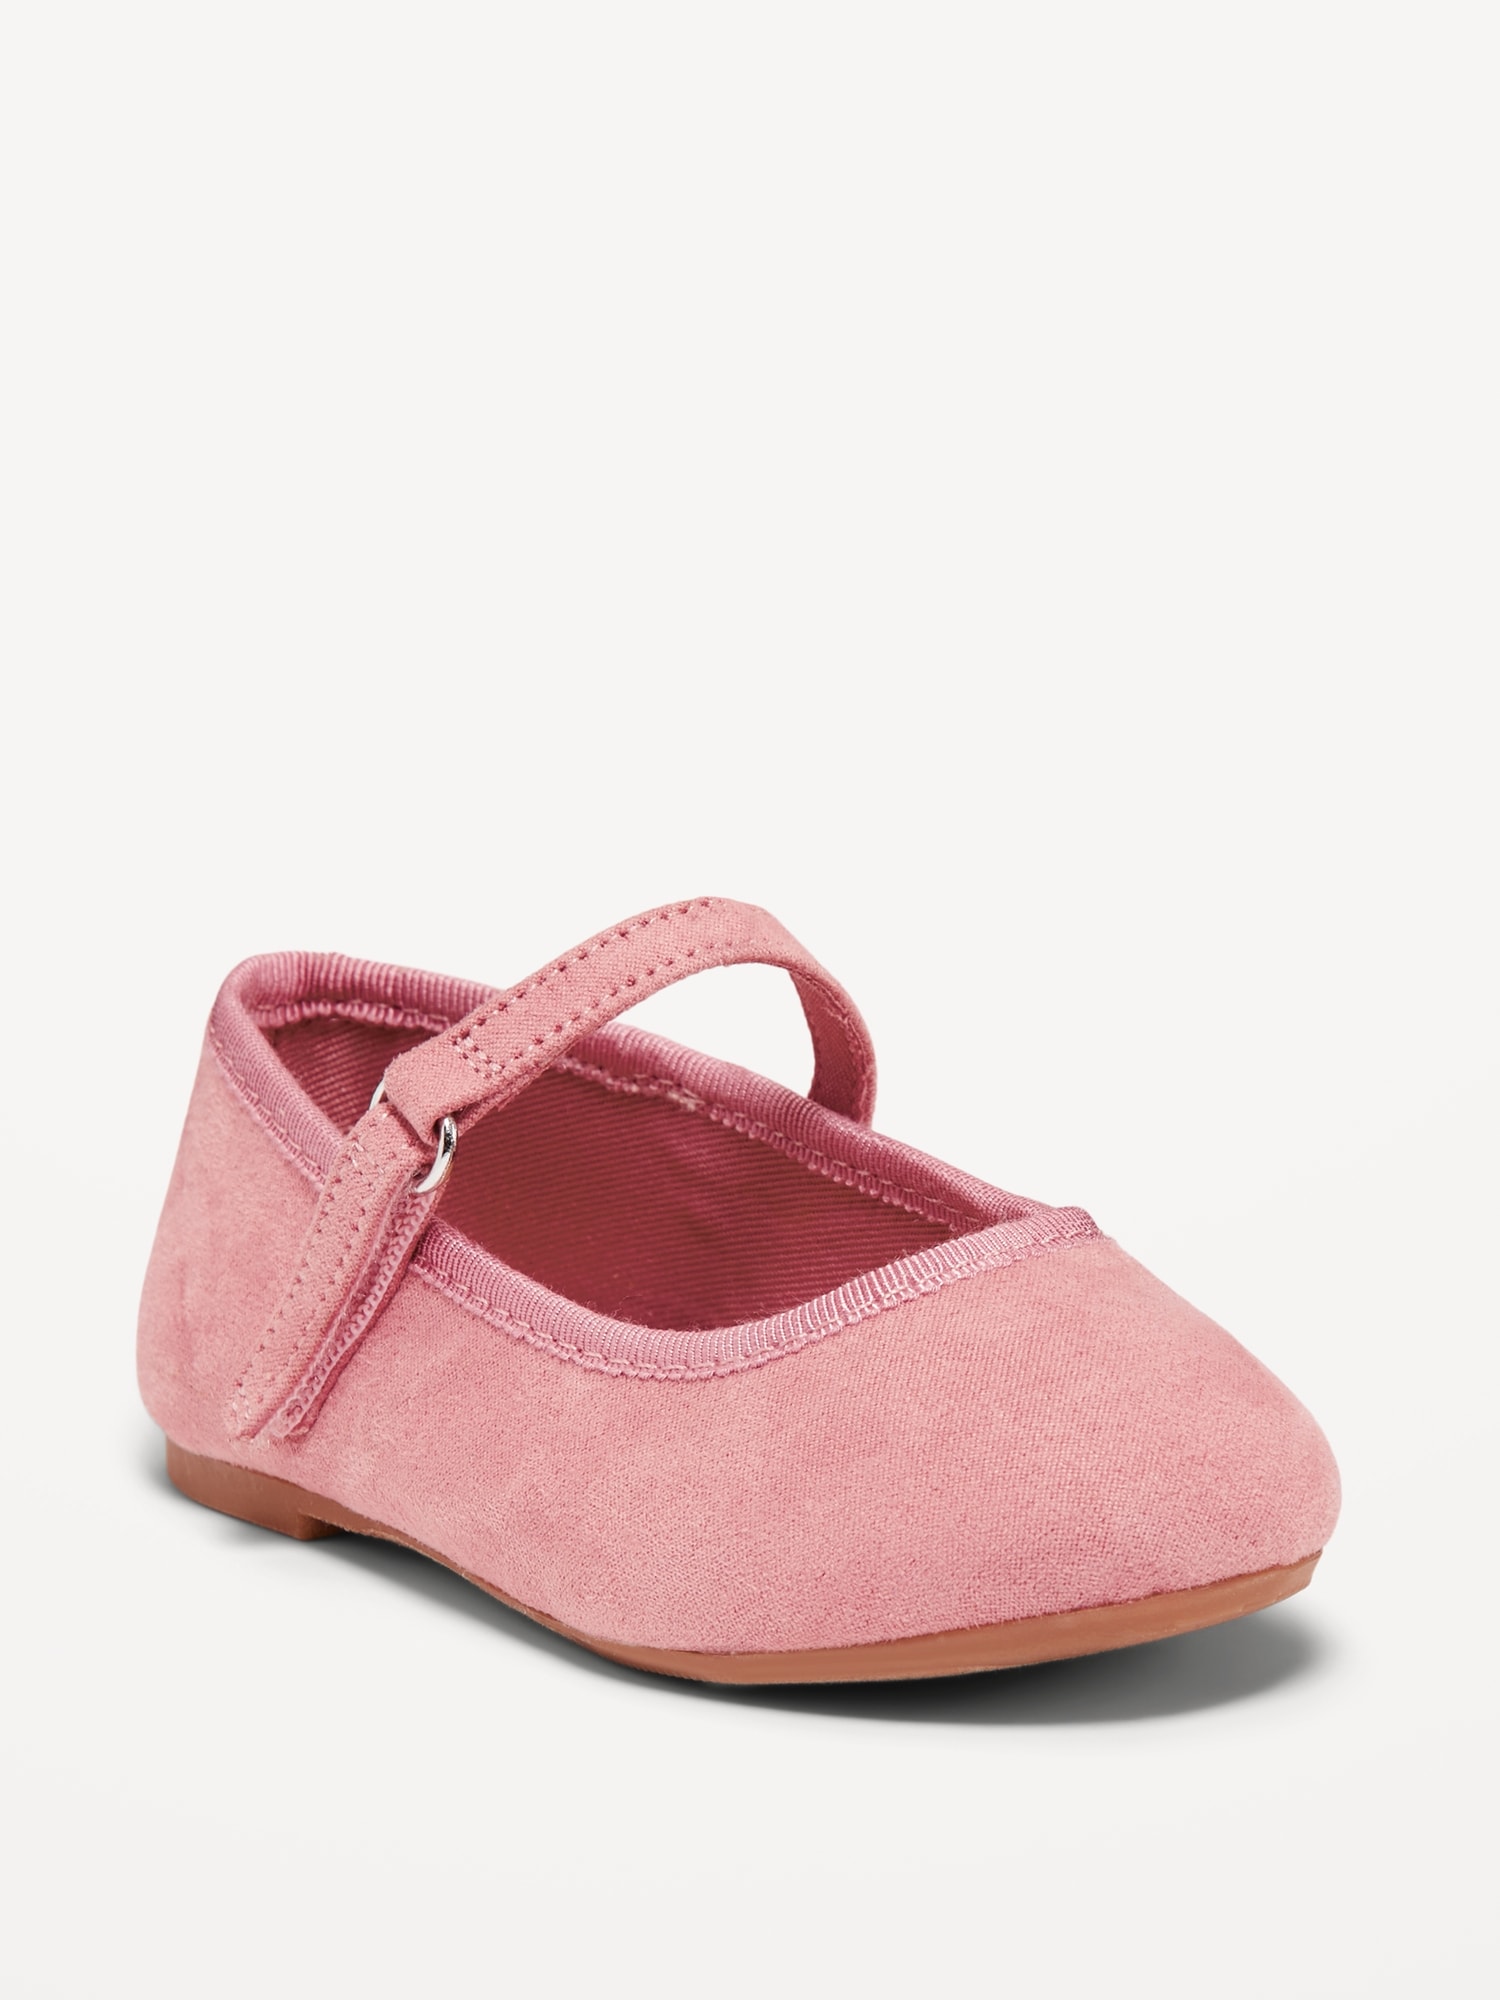 Ballet Flat Shoes for Toddler Girls | Old Navy